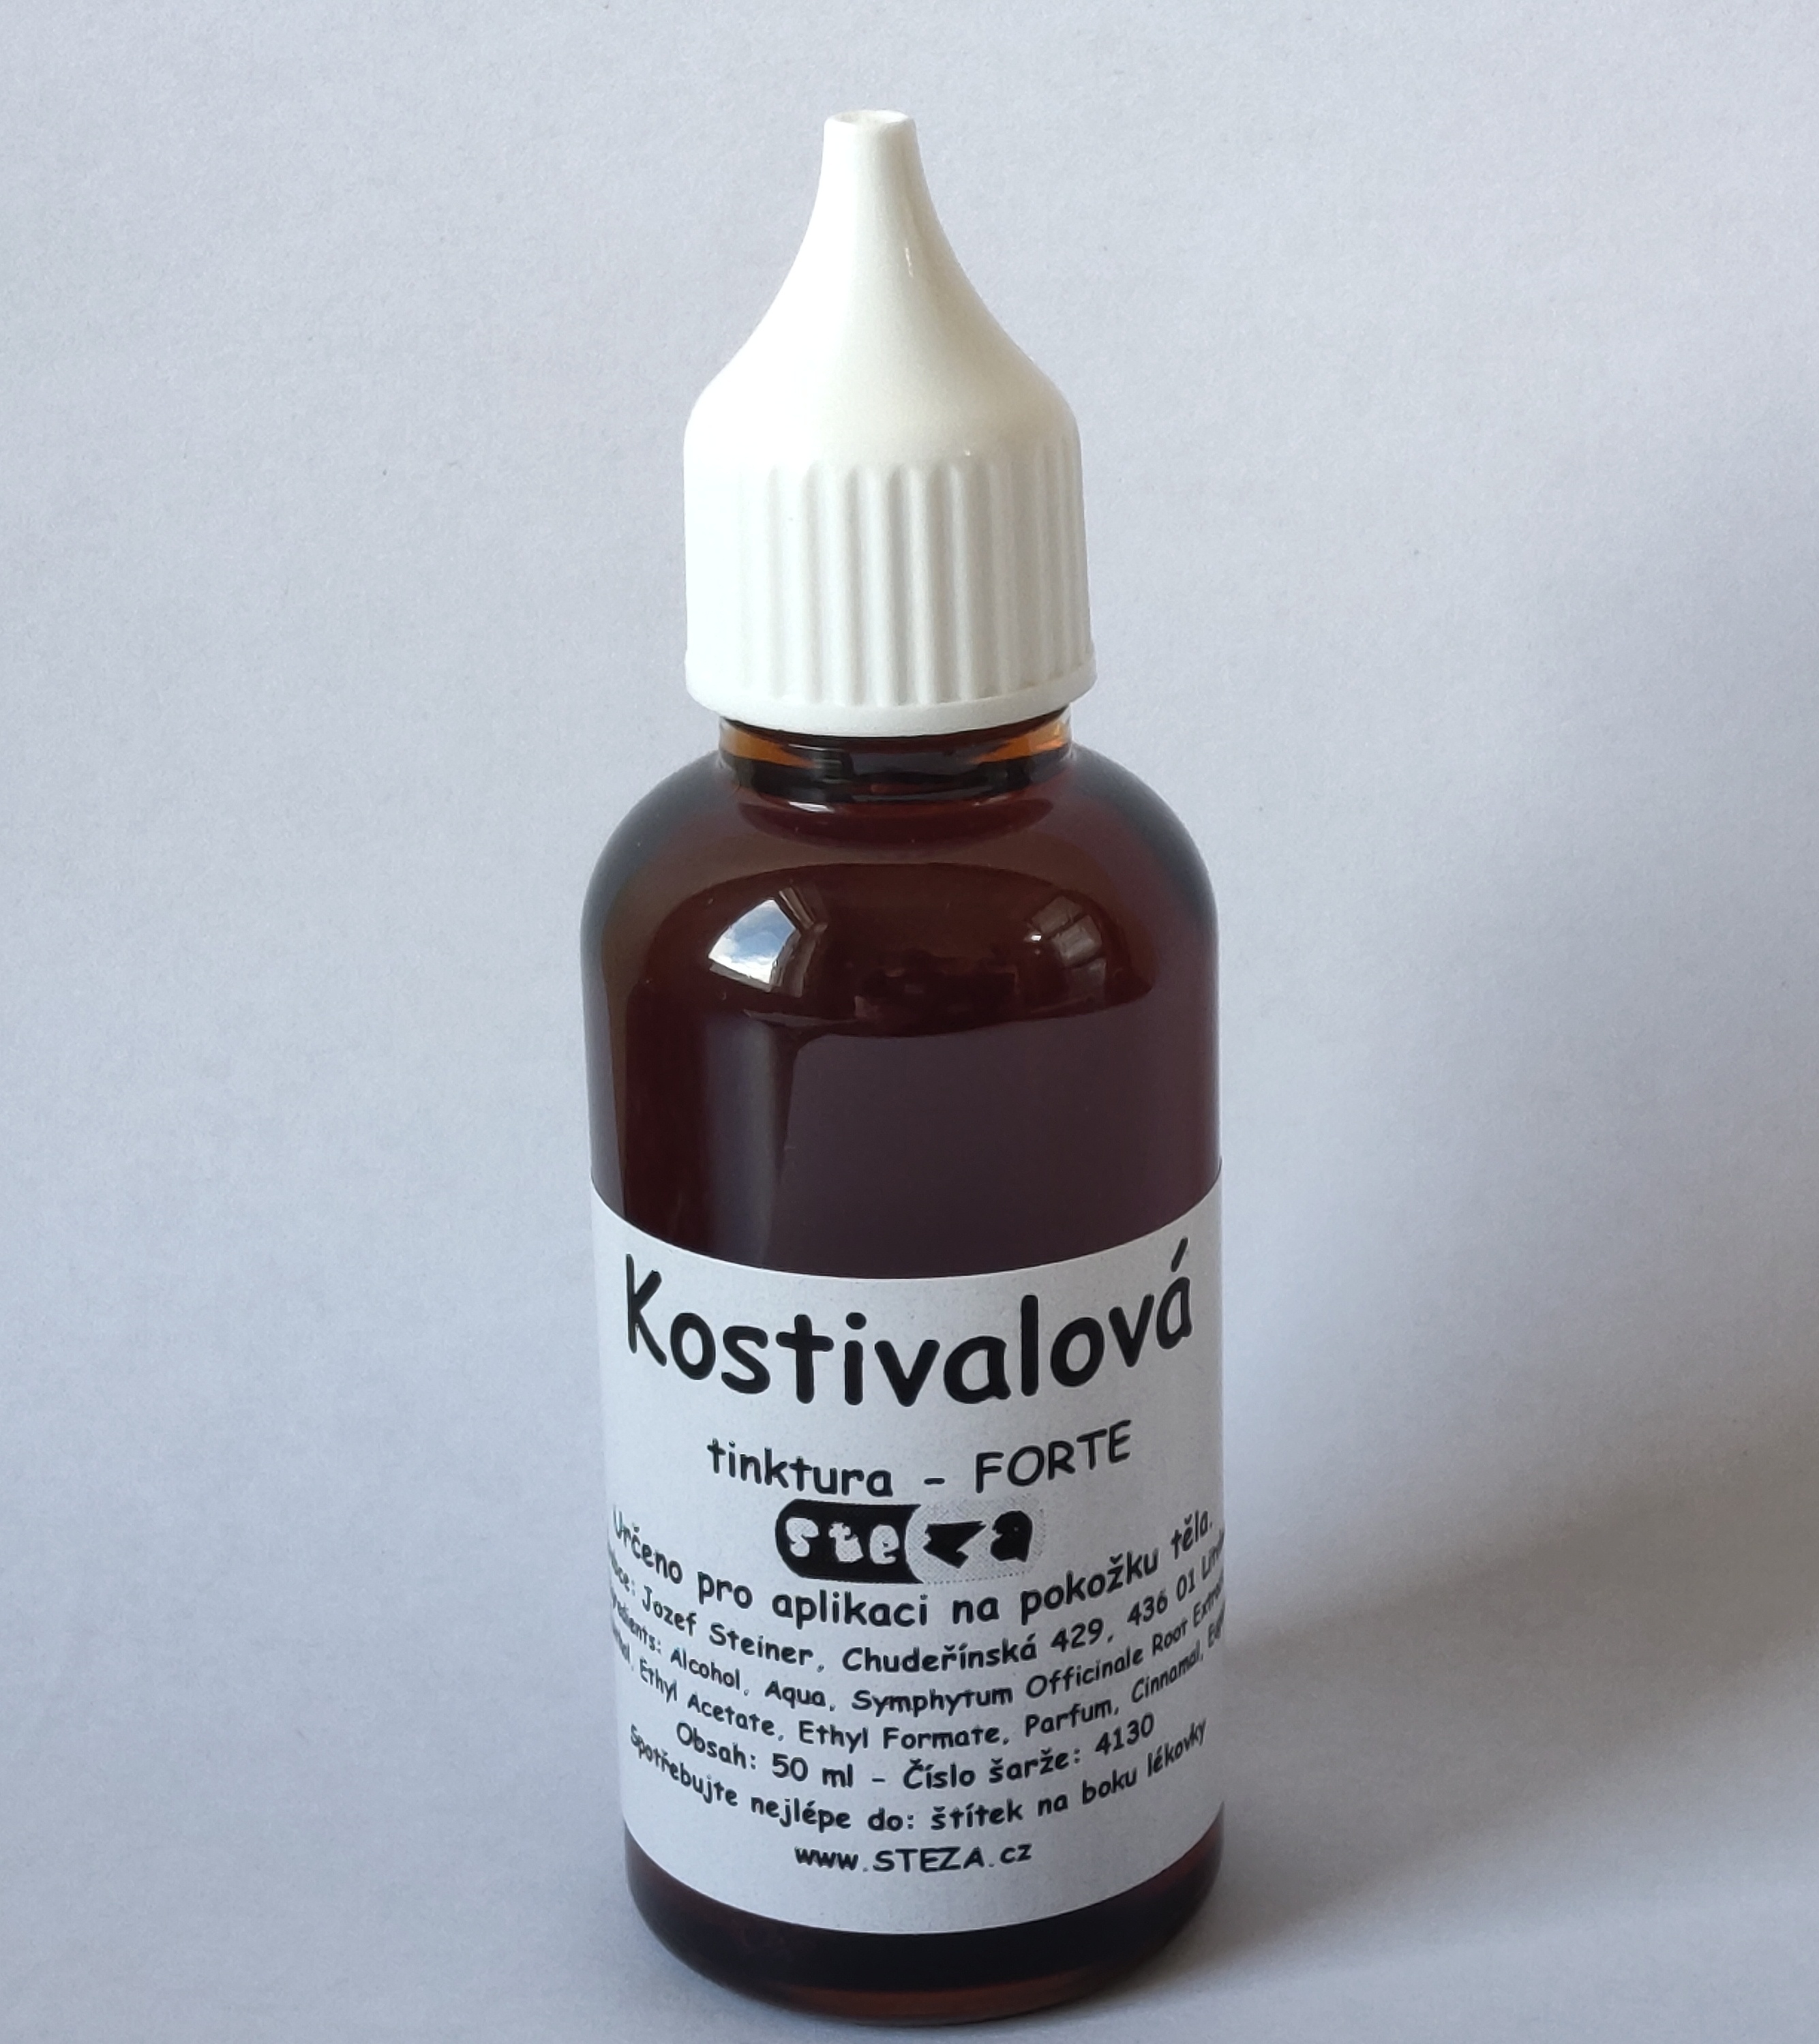 STEZA - Kostivalová tinktura - FORTE 5x lékovka po 50 ml.